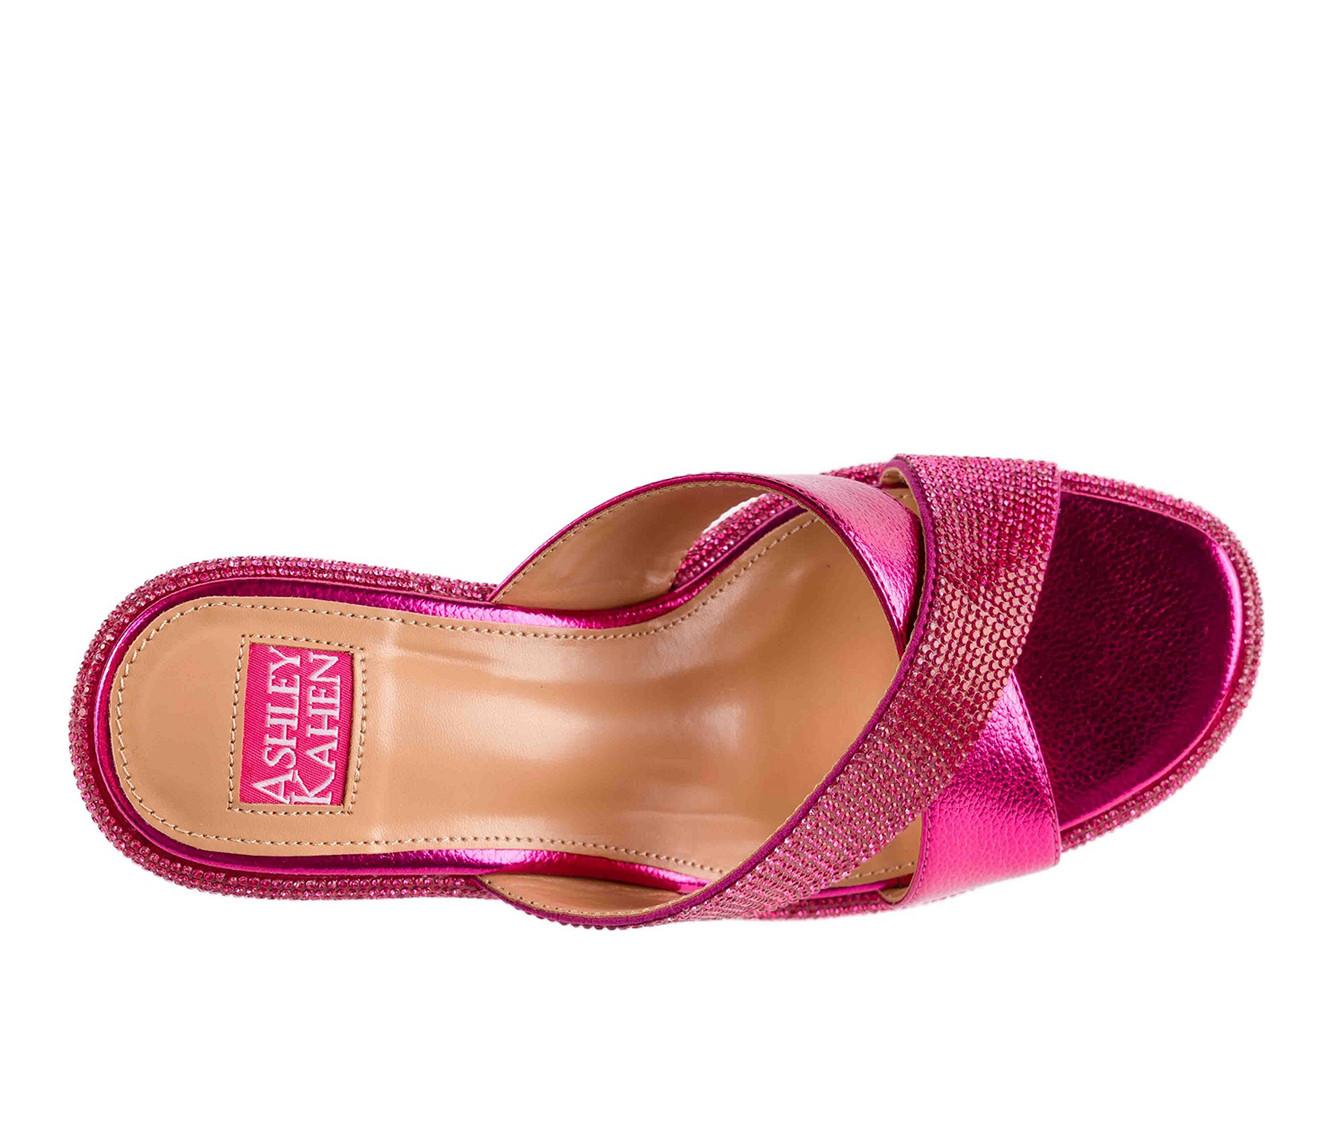 Women's Ashley Kahen Carnival Platform Wedge Sandals